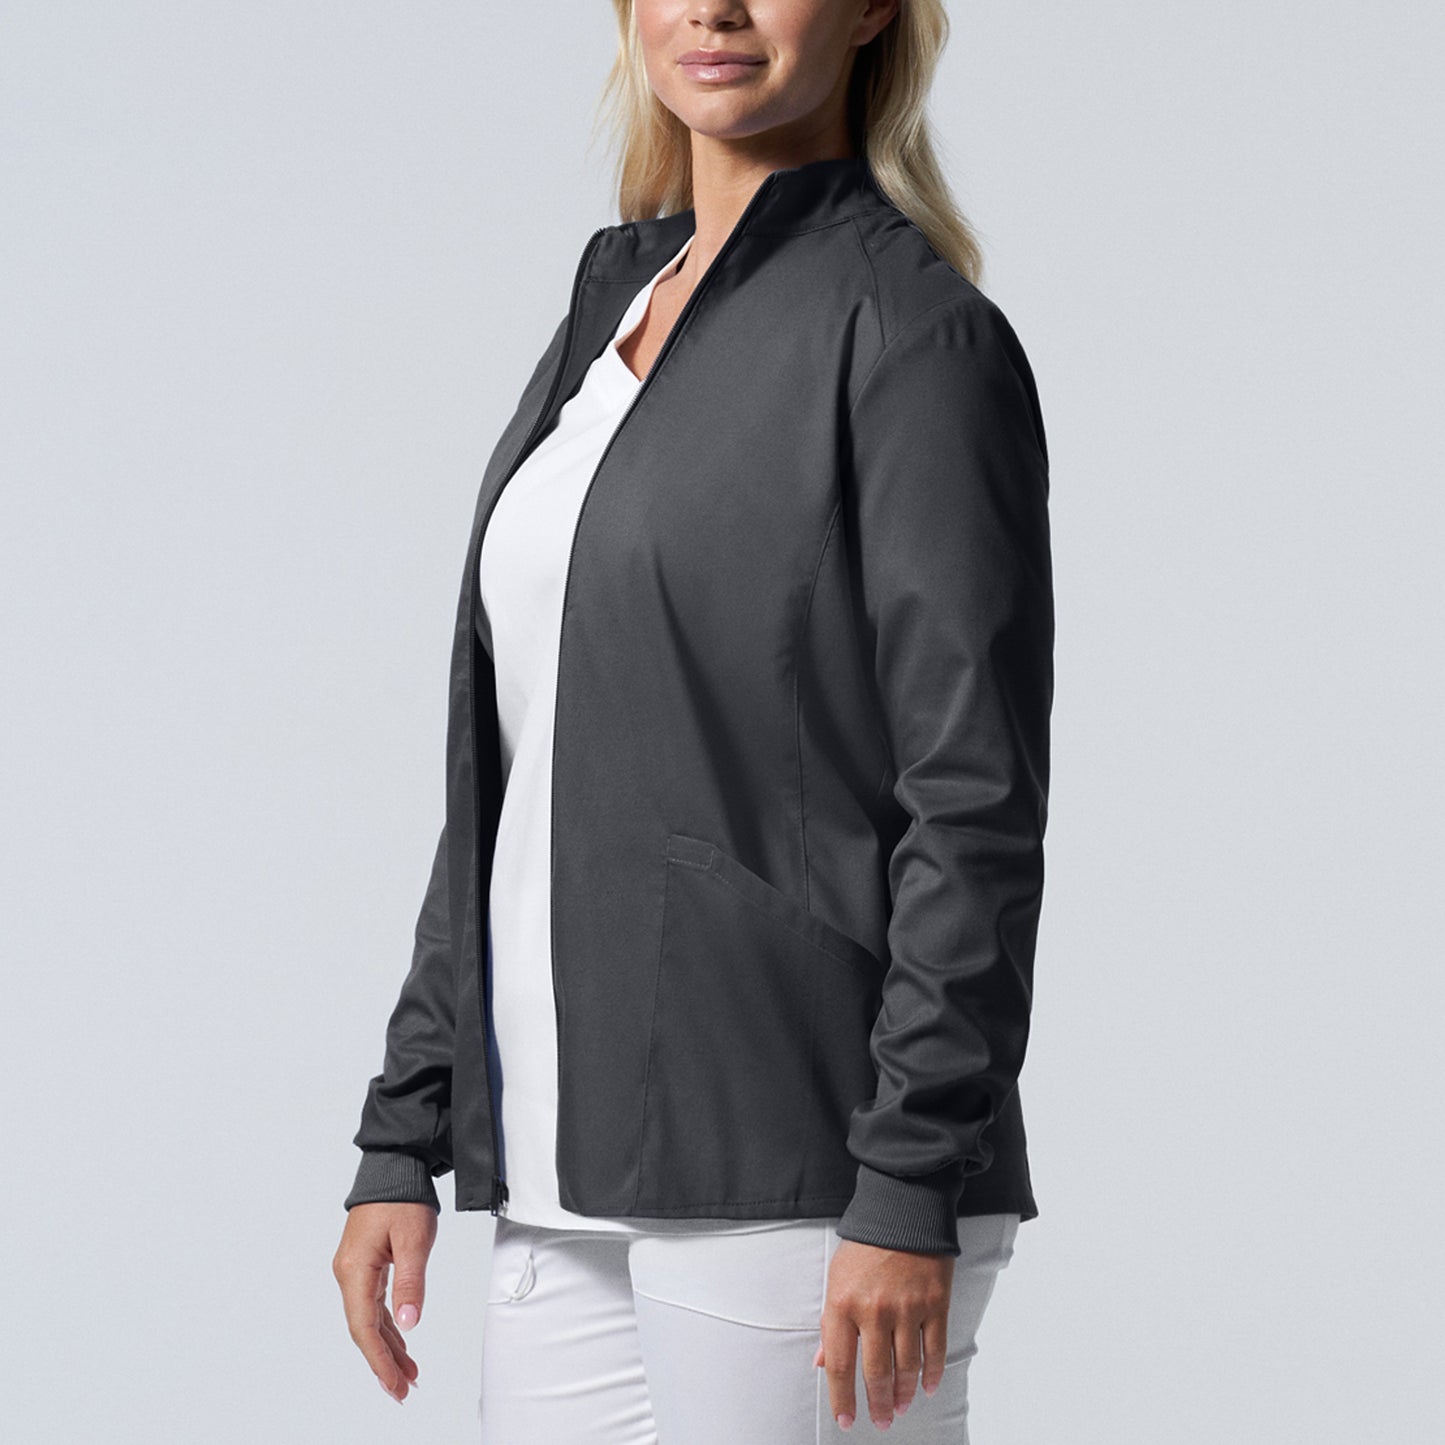 Women's jacket - PROFLEX - LJ 701